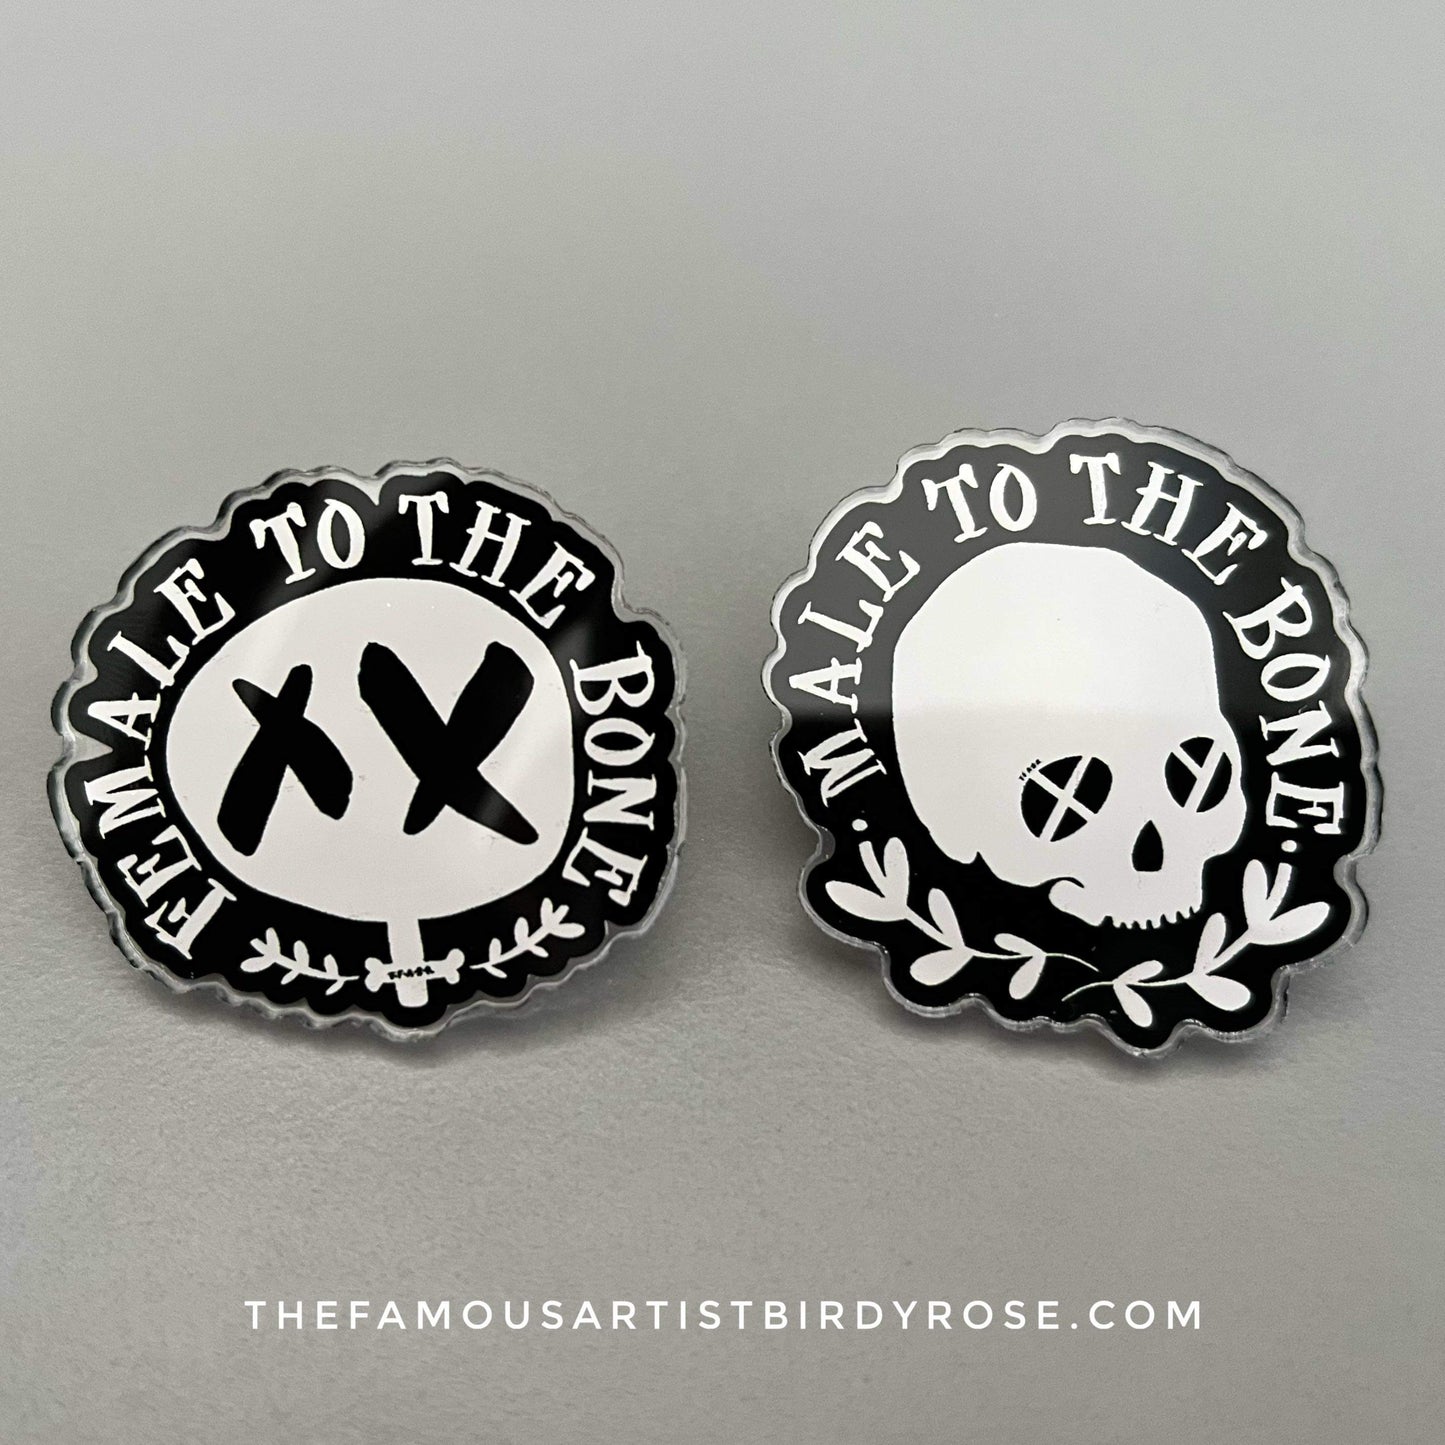 Female & Male ToTheBone Acrylic Pin Badges